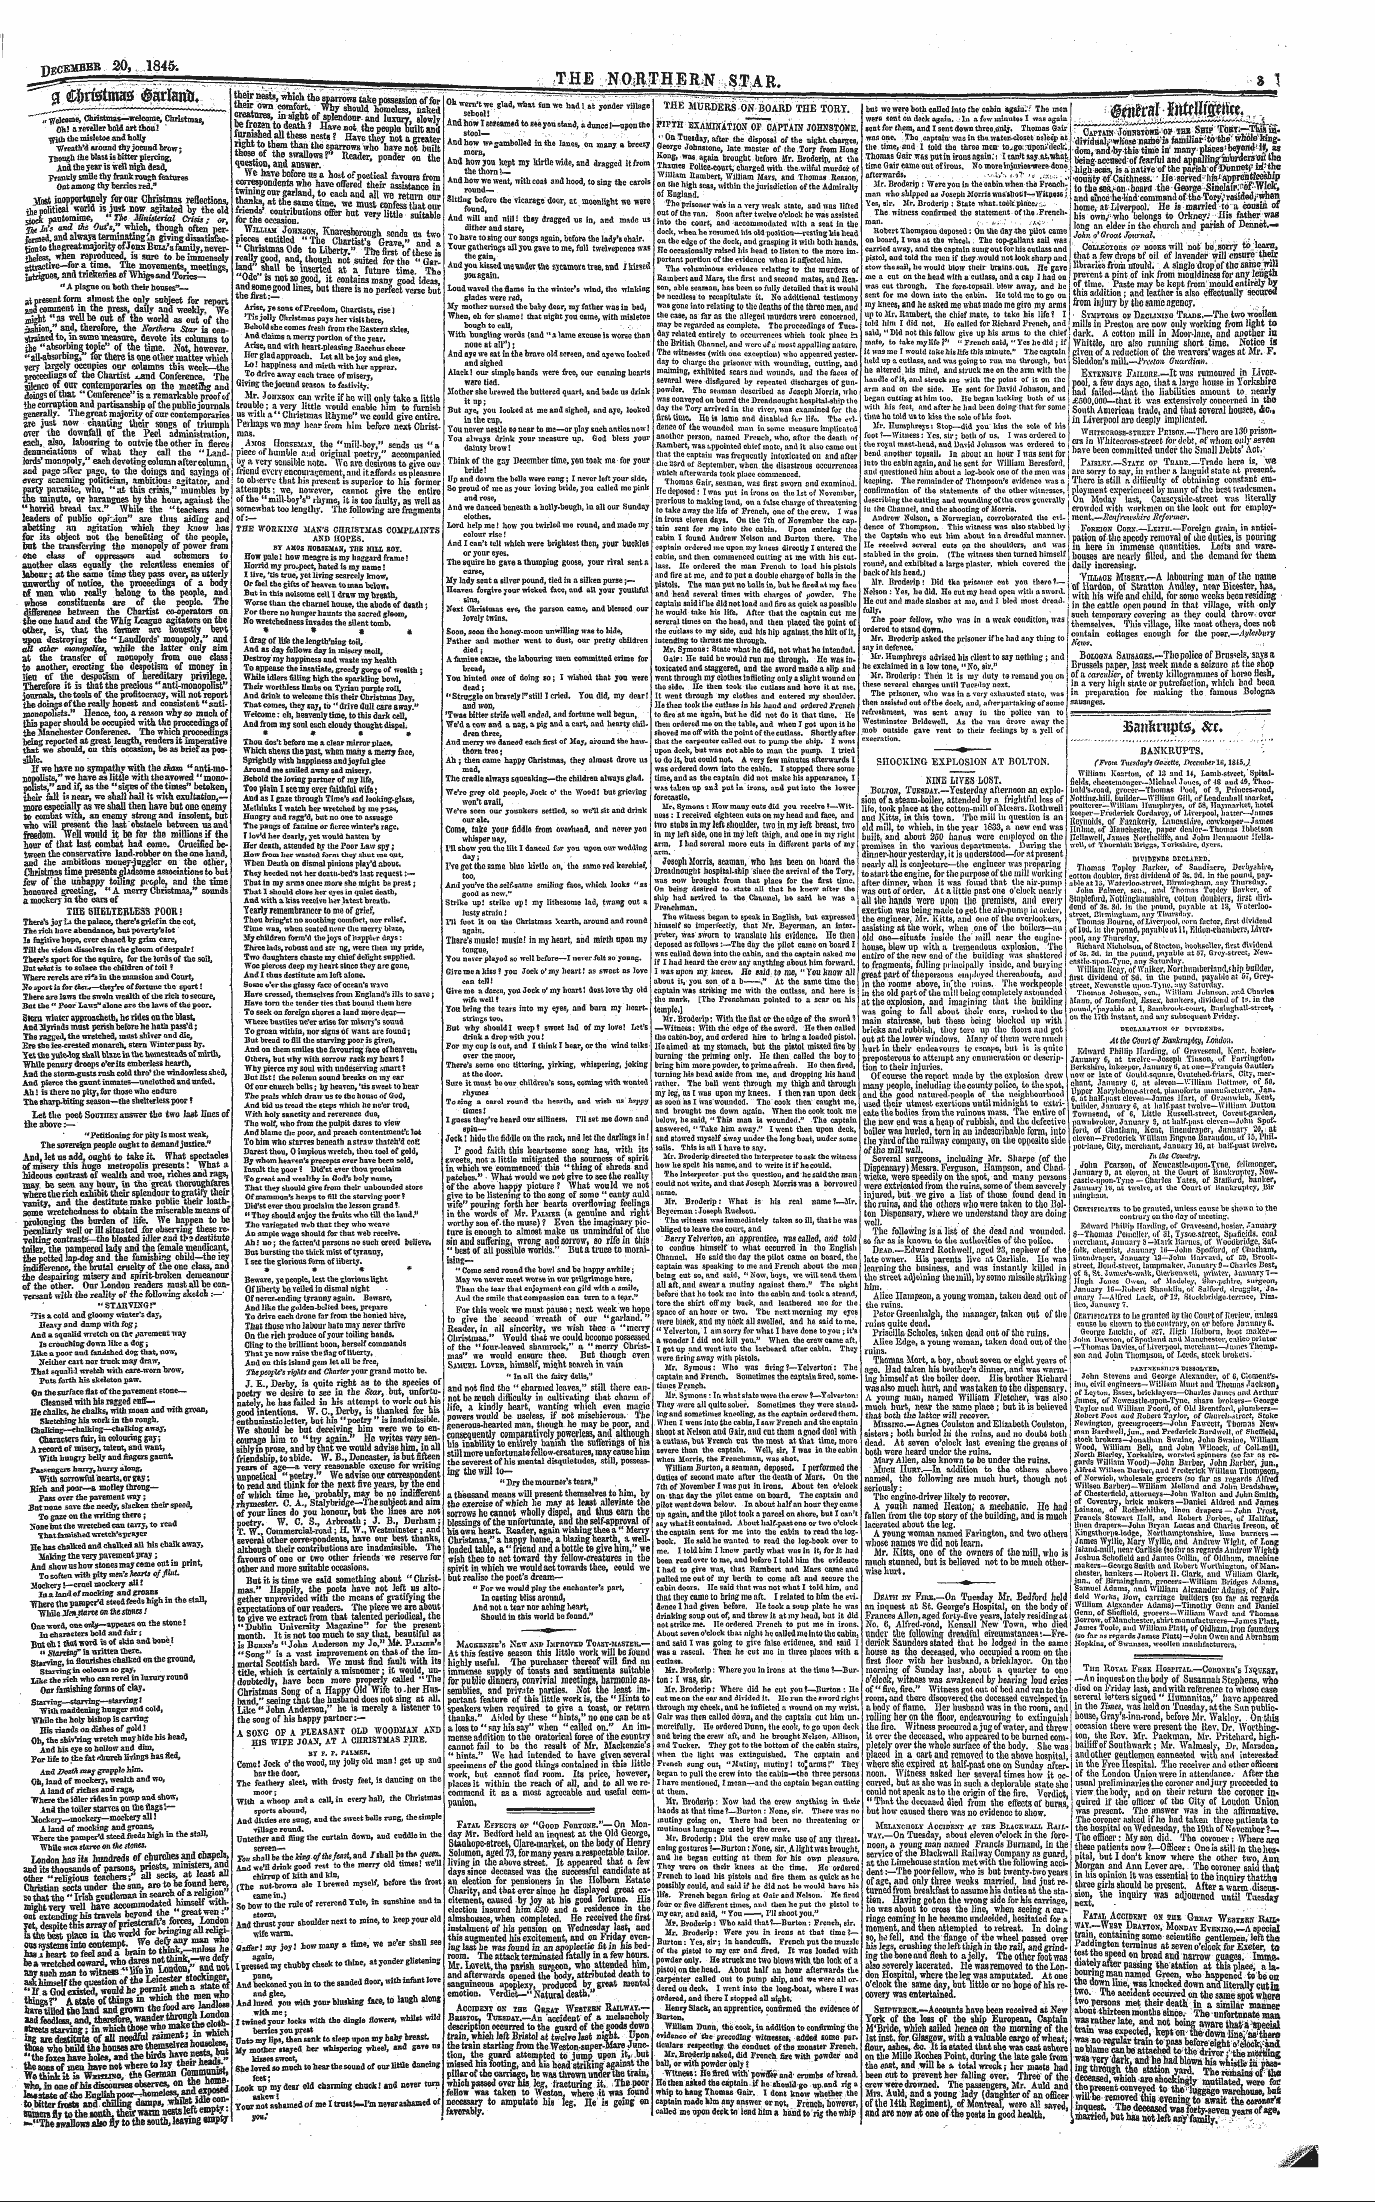 Northern Star (1837-1852): jS F Y, 4th edition - G Timmmz ©Arlanfr ,